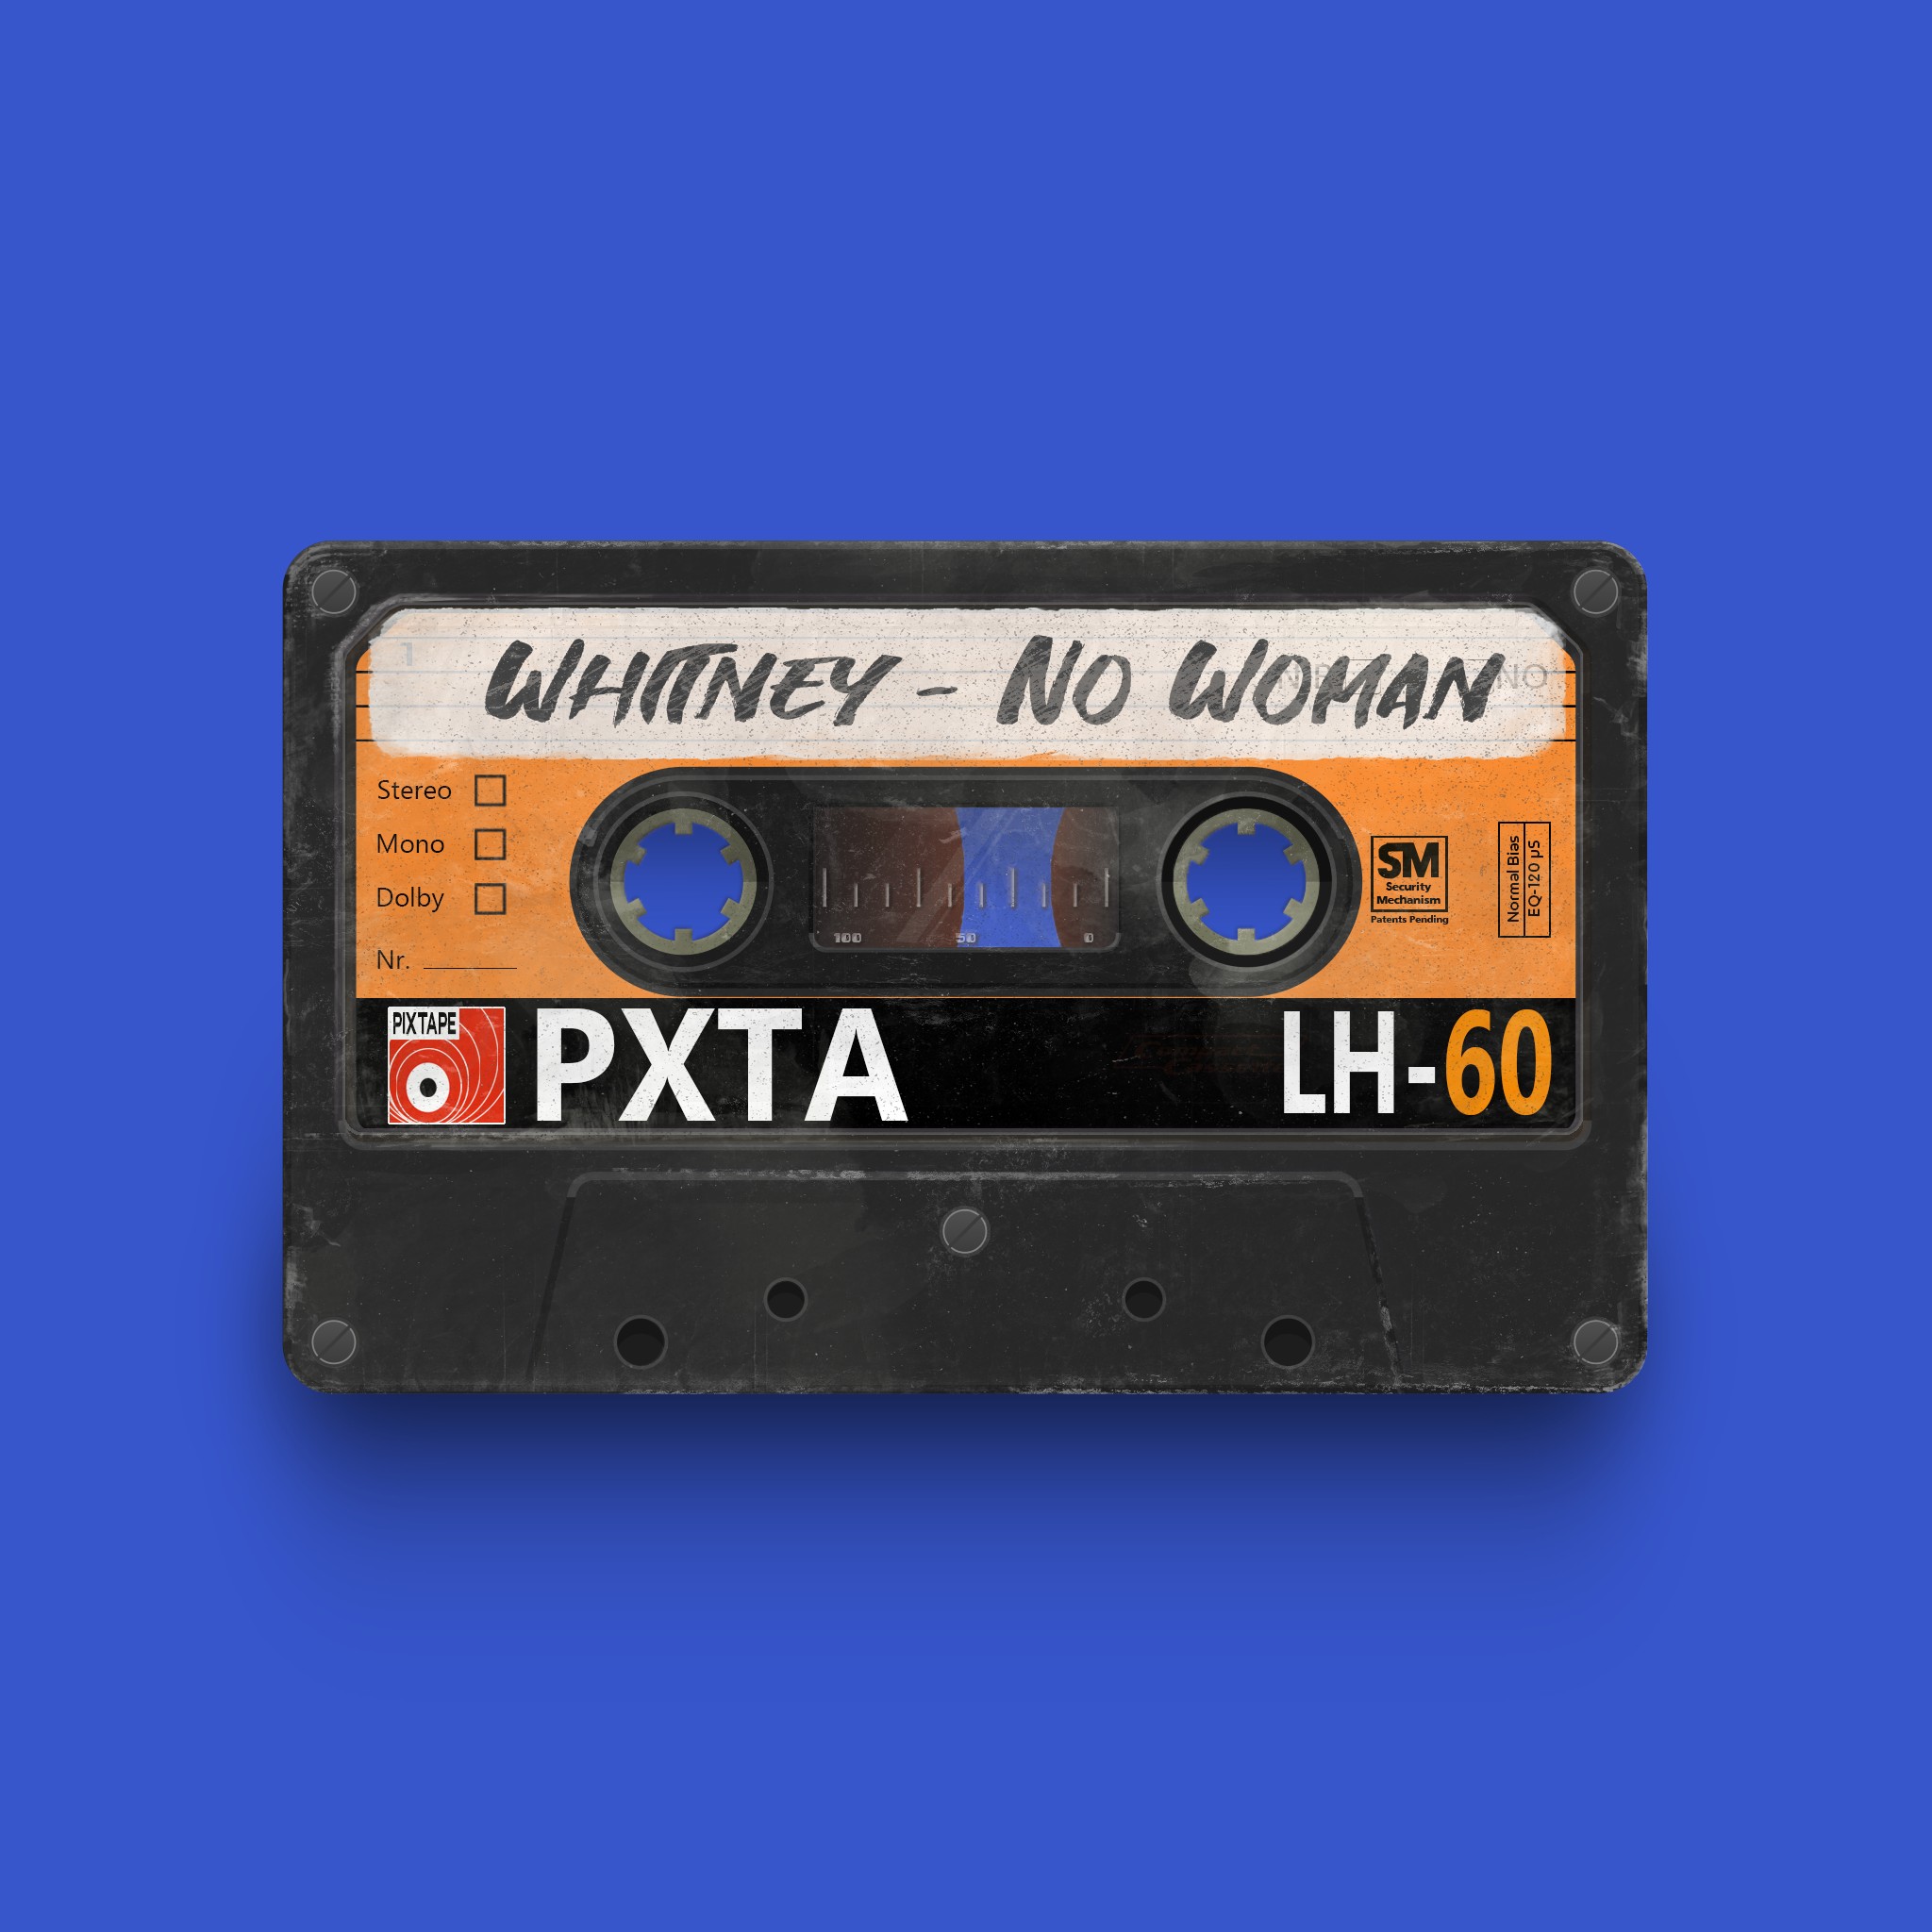 PixTape #3661 | Whitney - No Woman